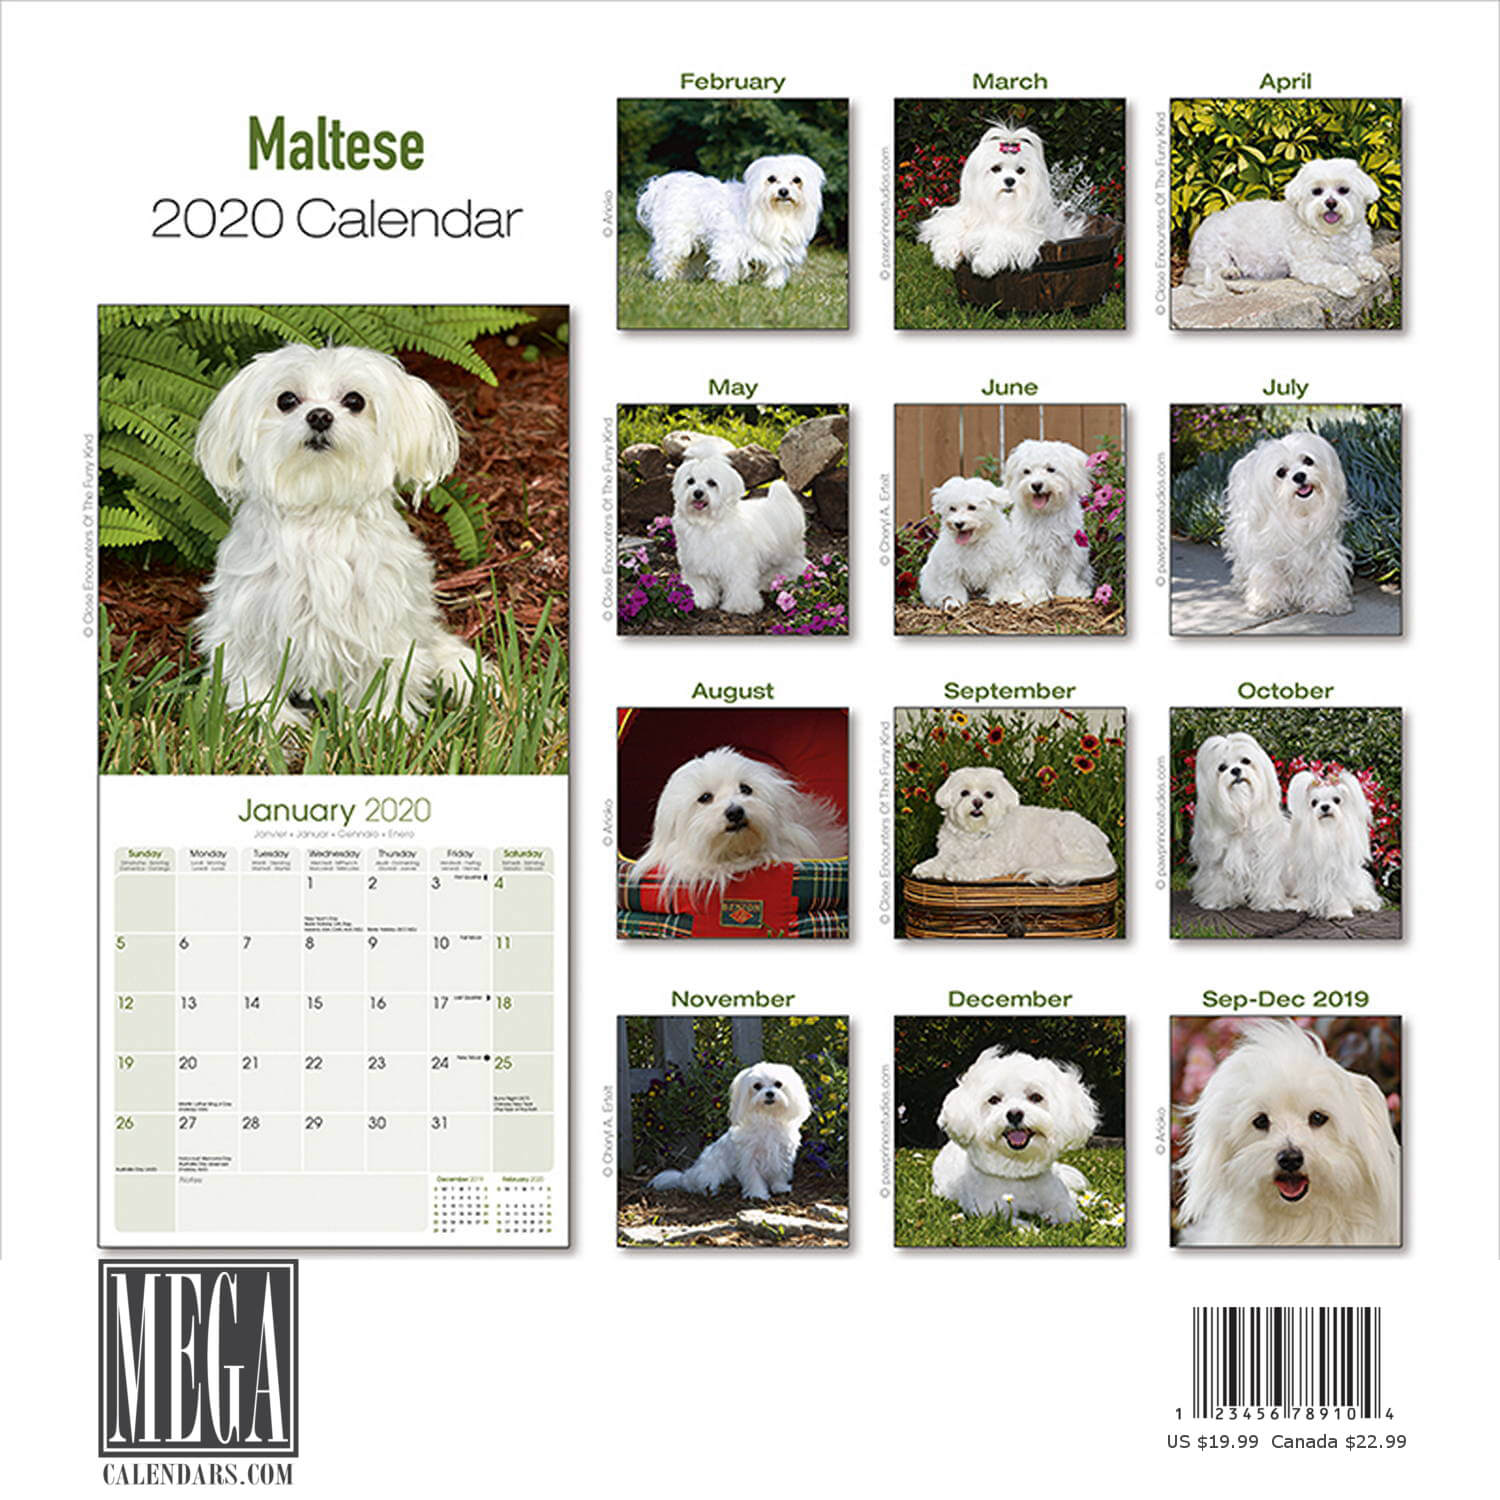 Maltese Calendar 2020 Premium Dog Breed Calendars eBay